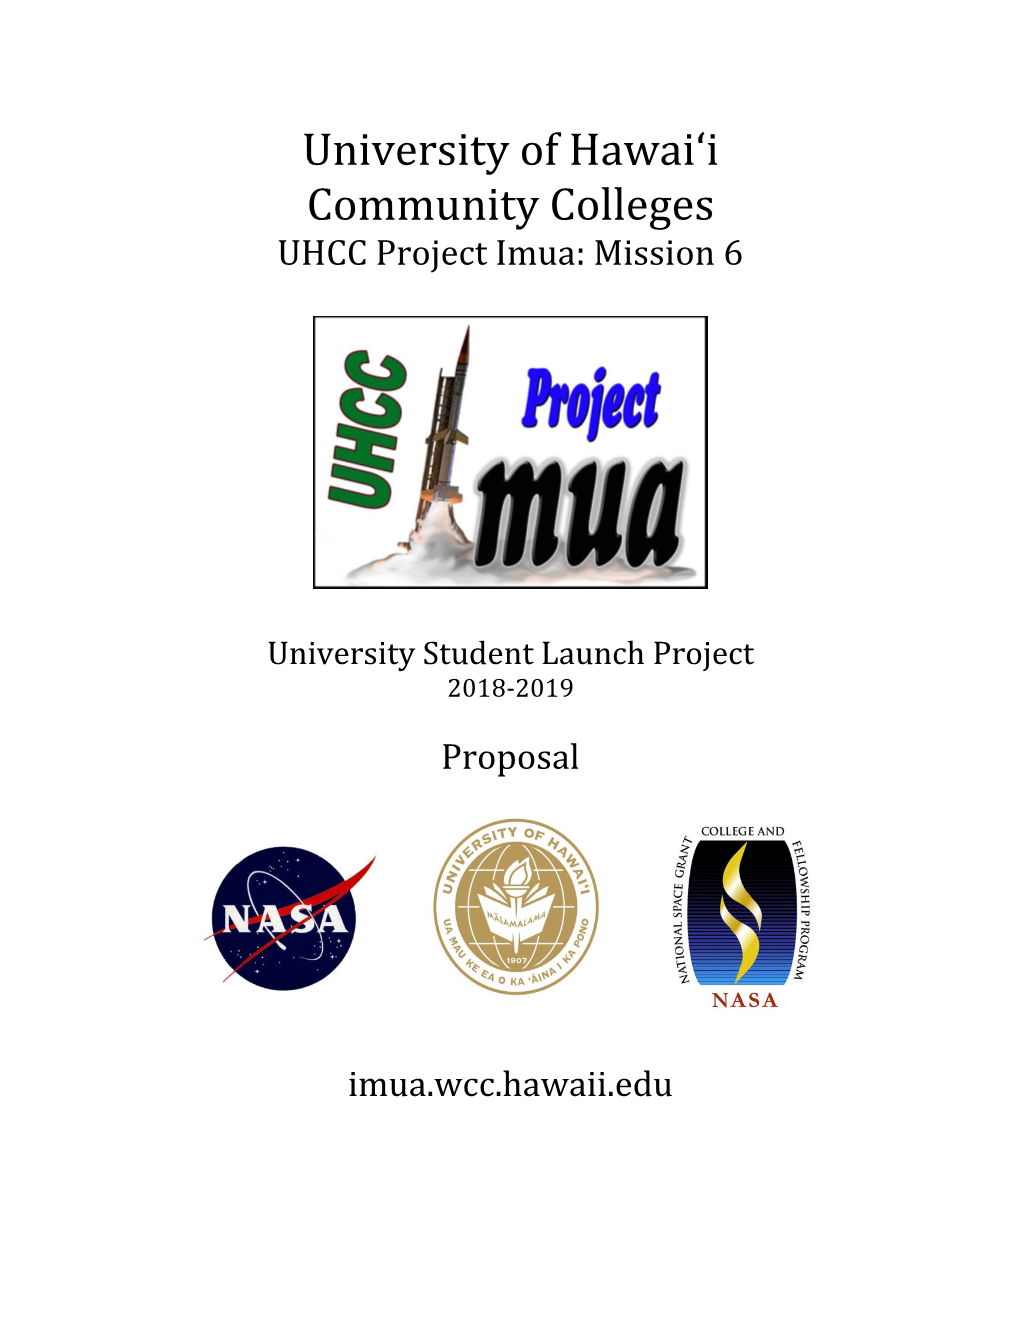 University Student Launch Project Proposal